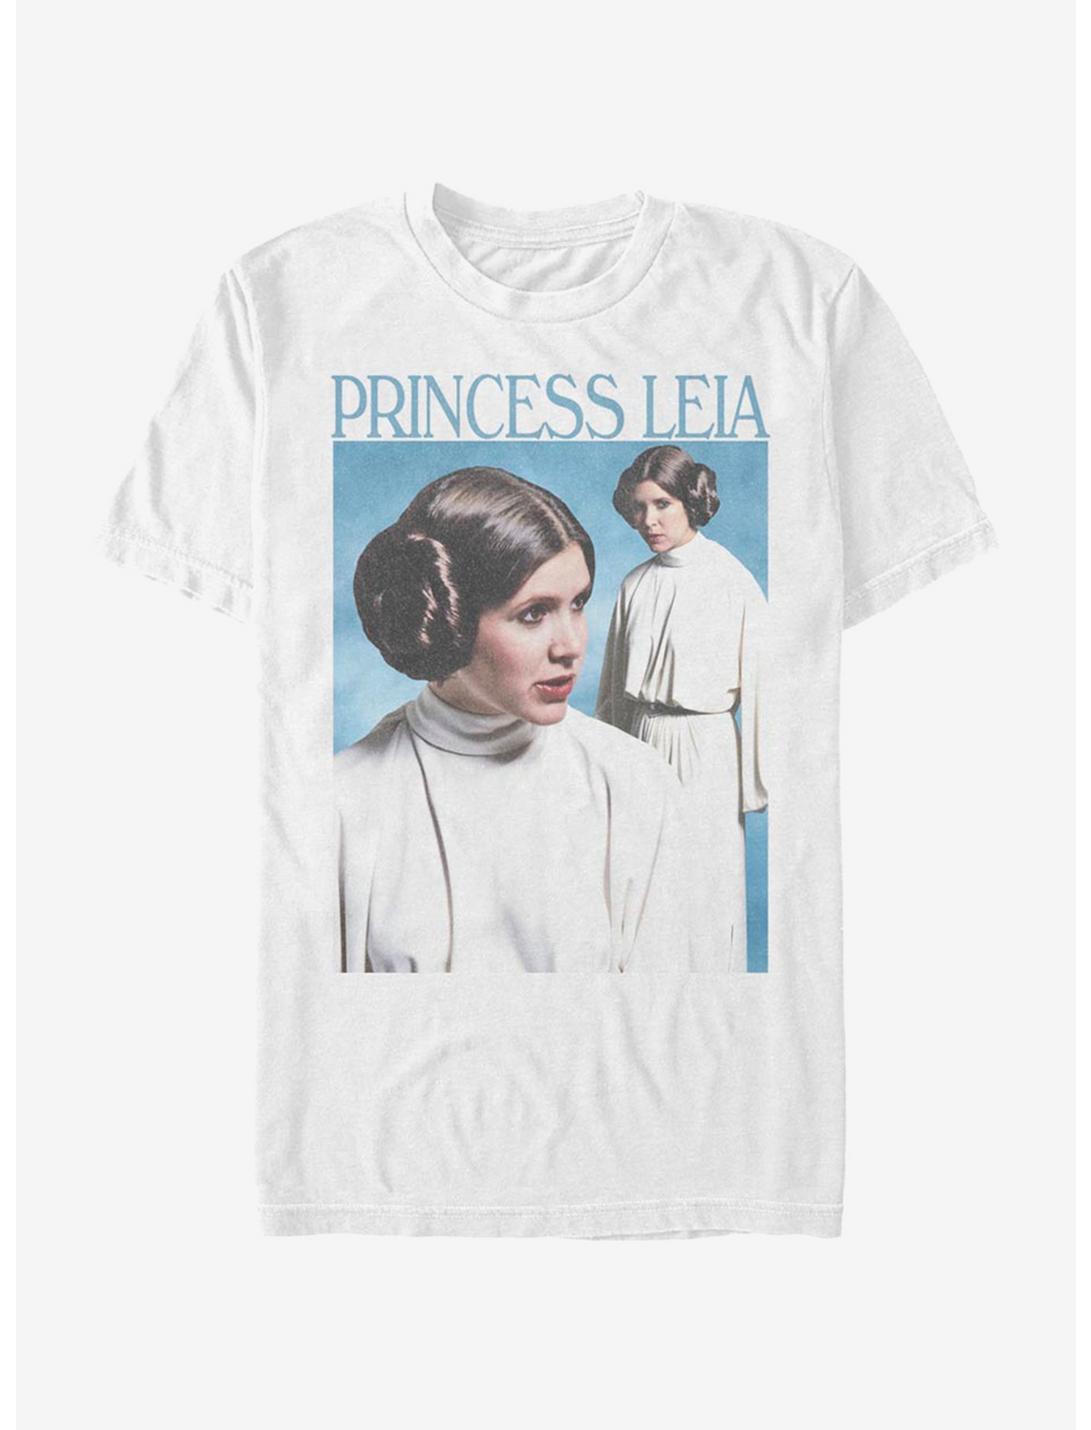 Star Wars Leia Photo T-Shirt, WHITE, hi-res